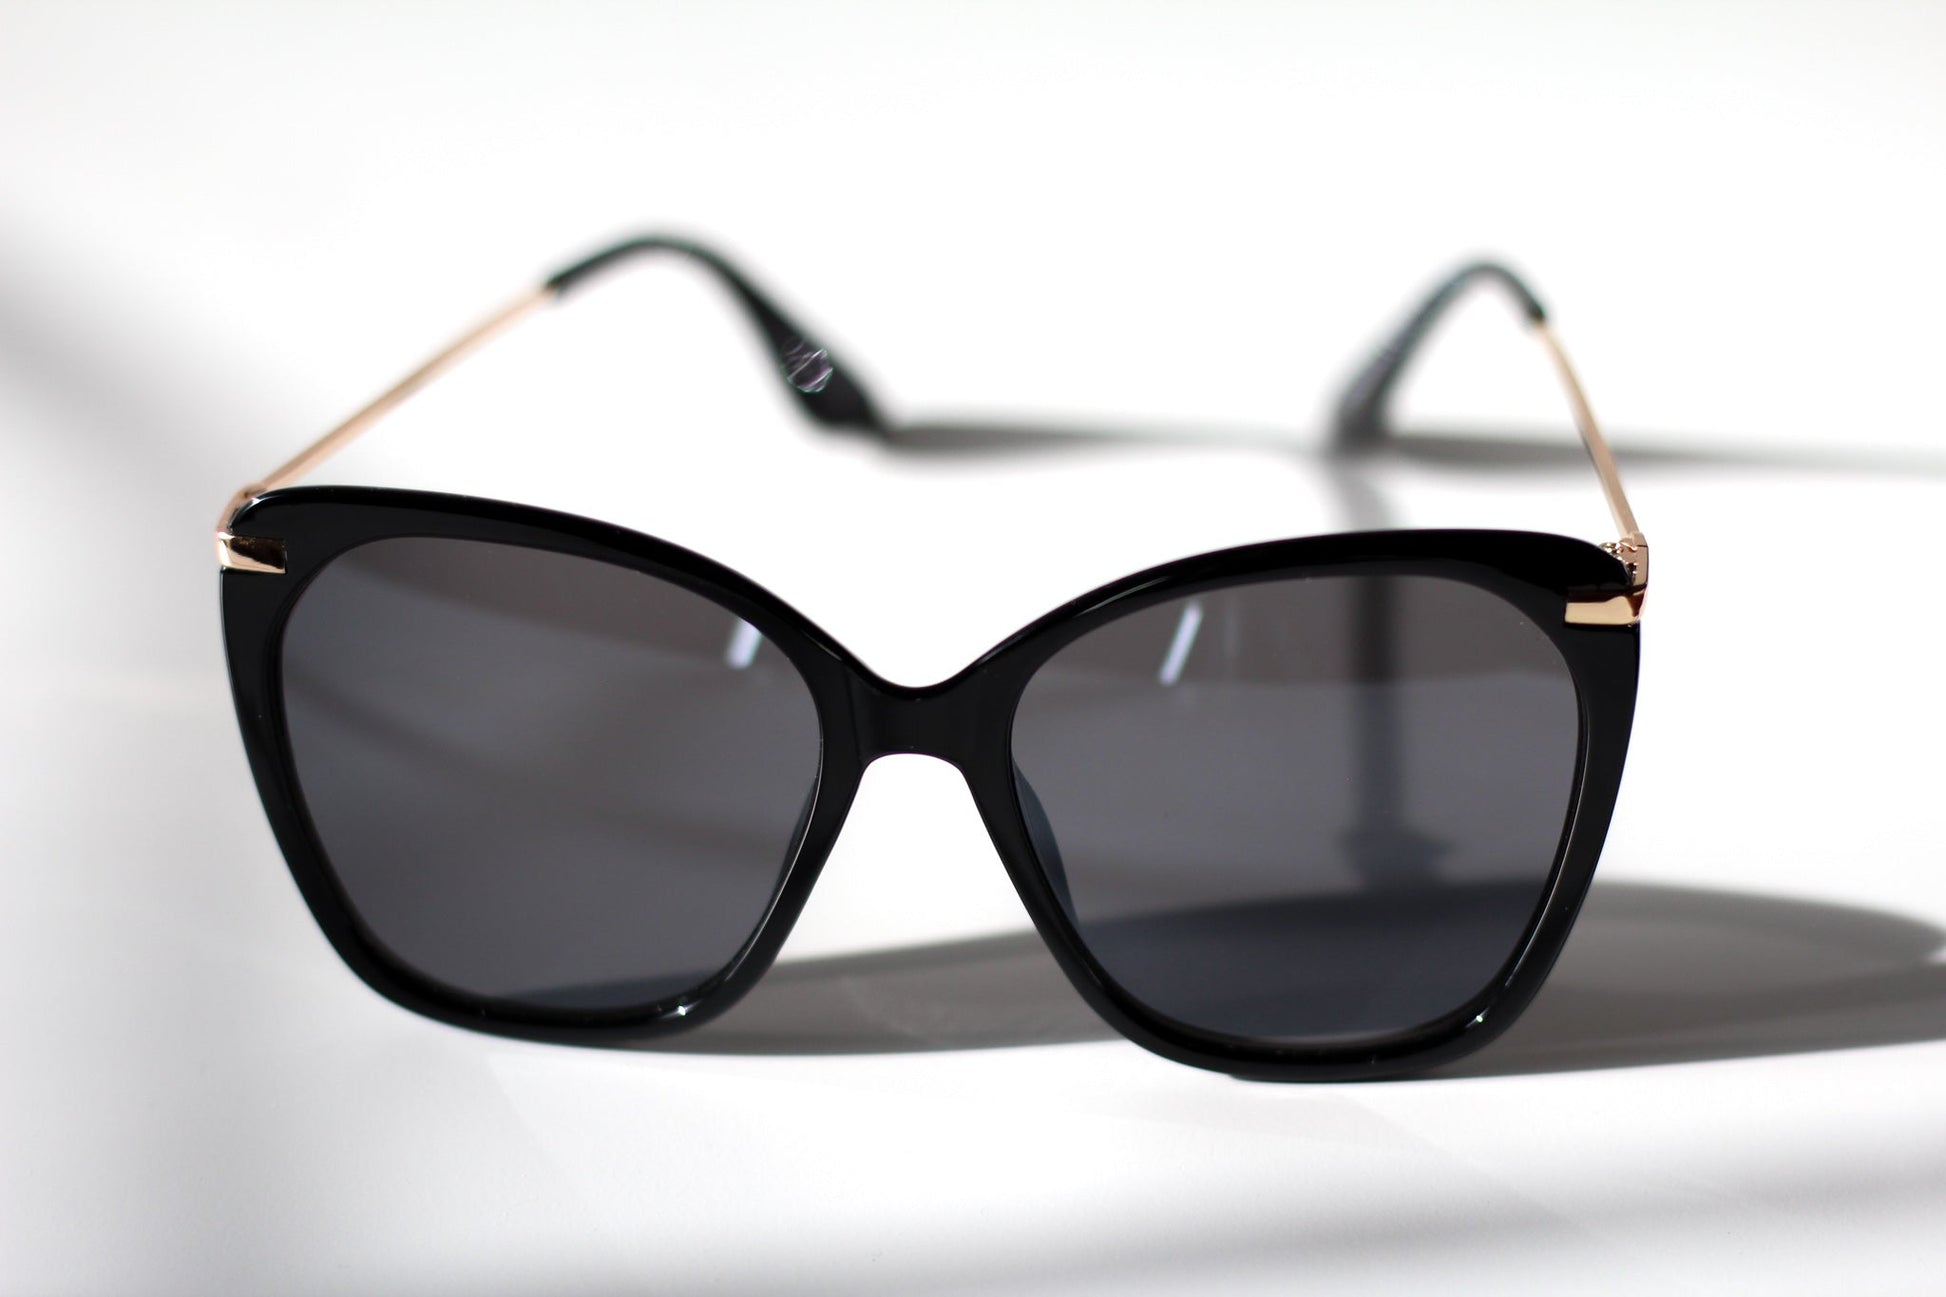 Black Large with Gold Temple Detail Sunglasses - Black Lens